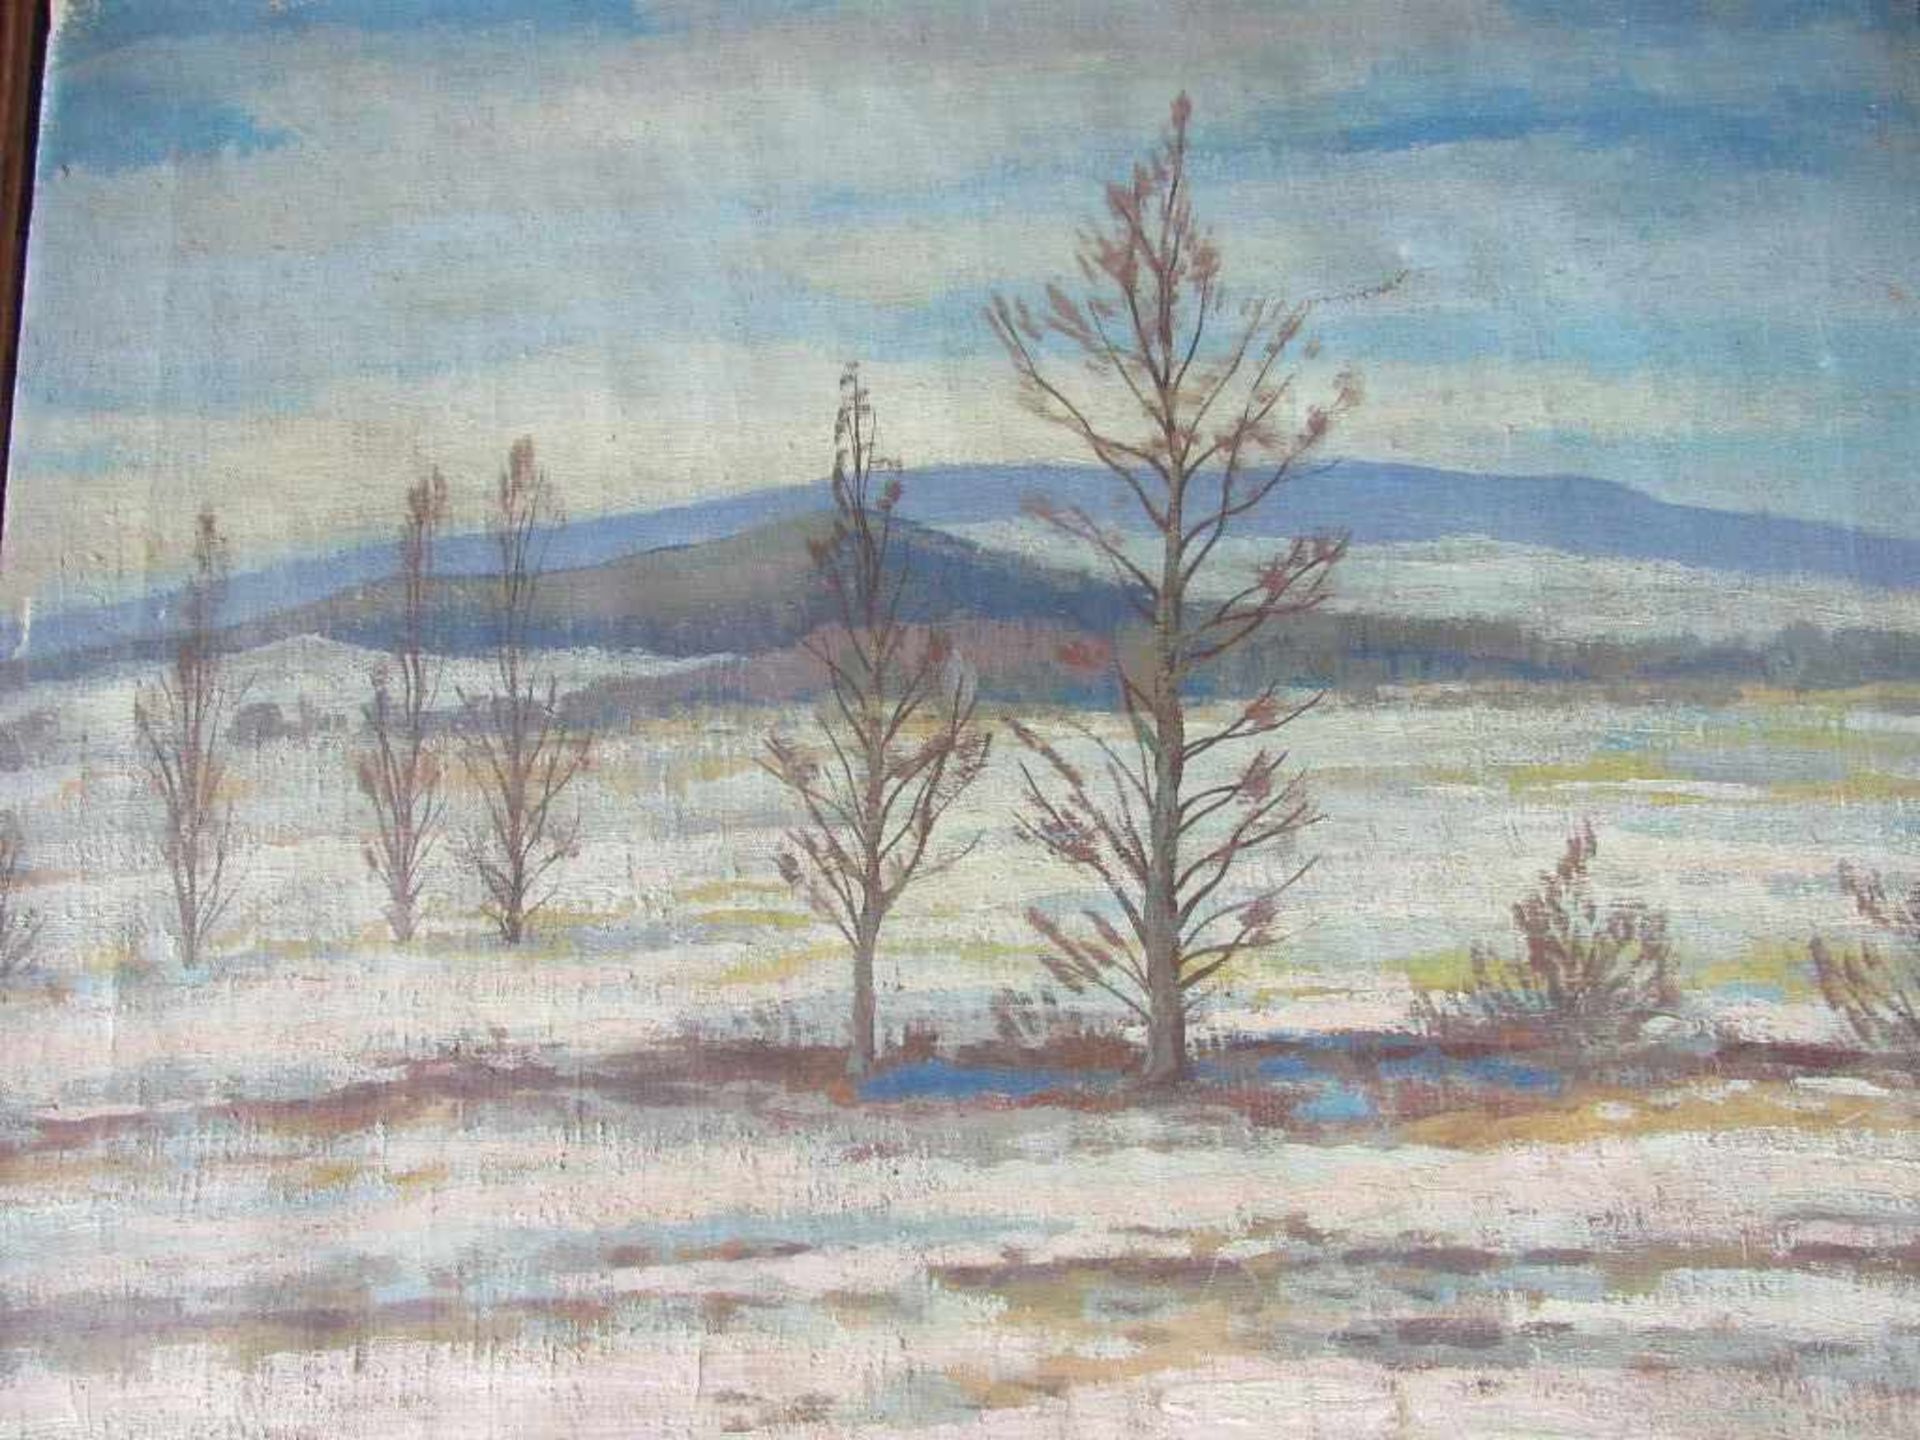 Ölgemälde Öl auf Leinwand Bäume im Winter signiert K. Jandar 1937 81x70cm- - -20.00 % buyer's